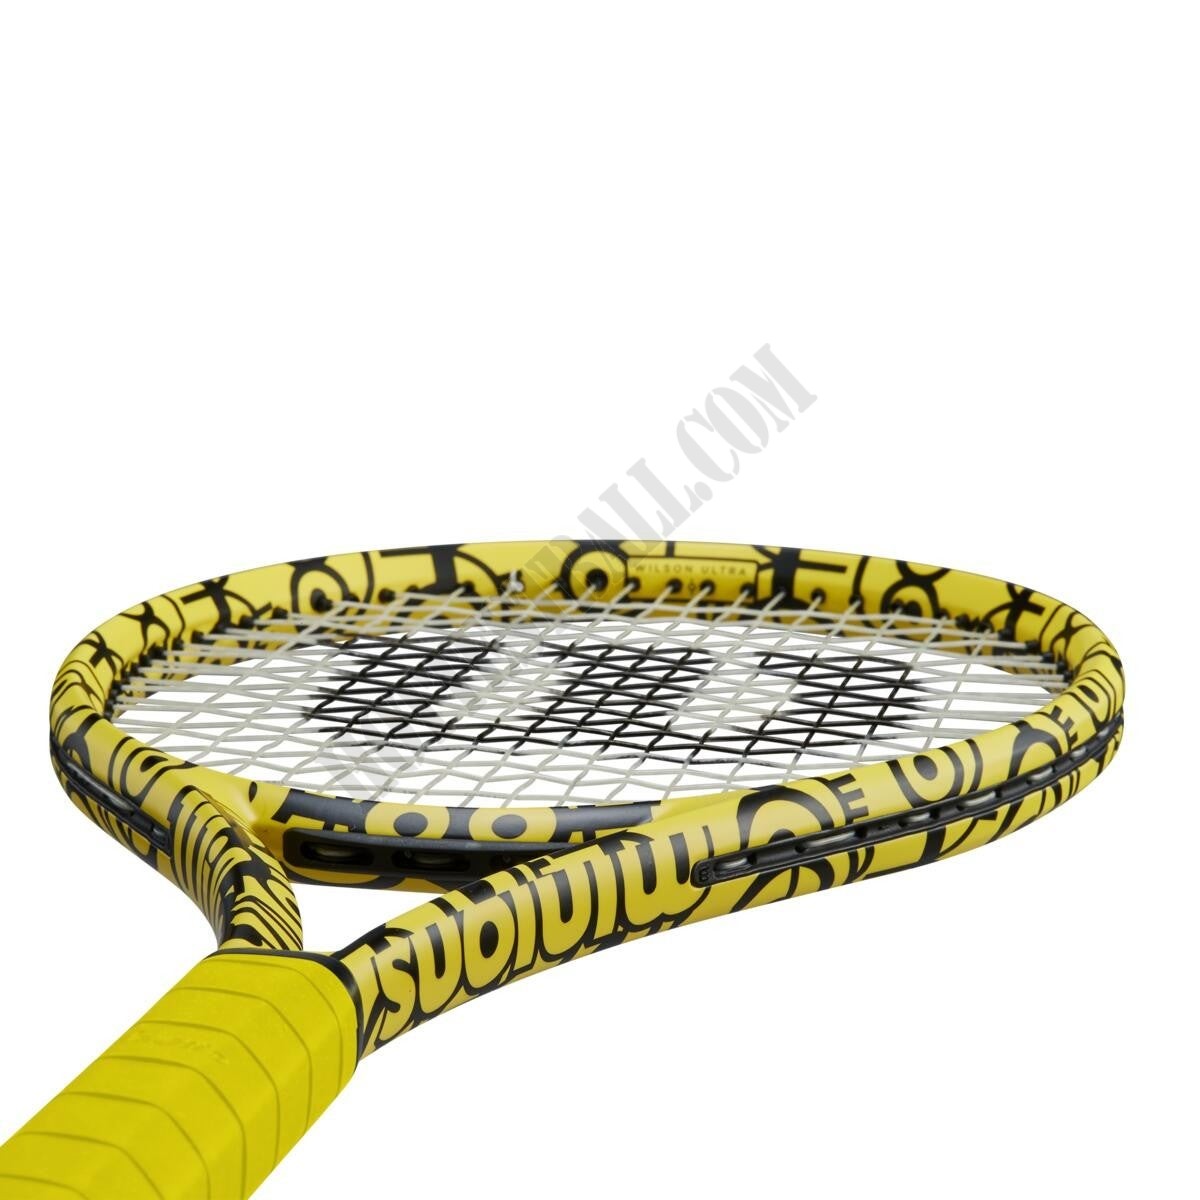 Minions Ultra 100 Tennis Racket - Wilson Discount Store - -4